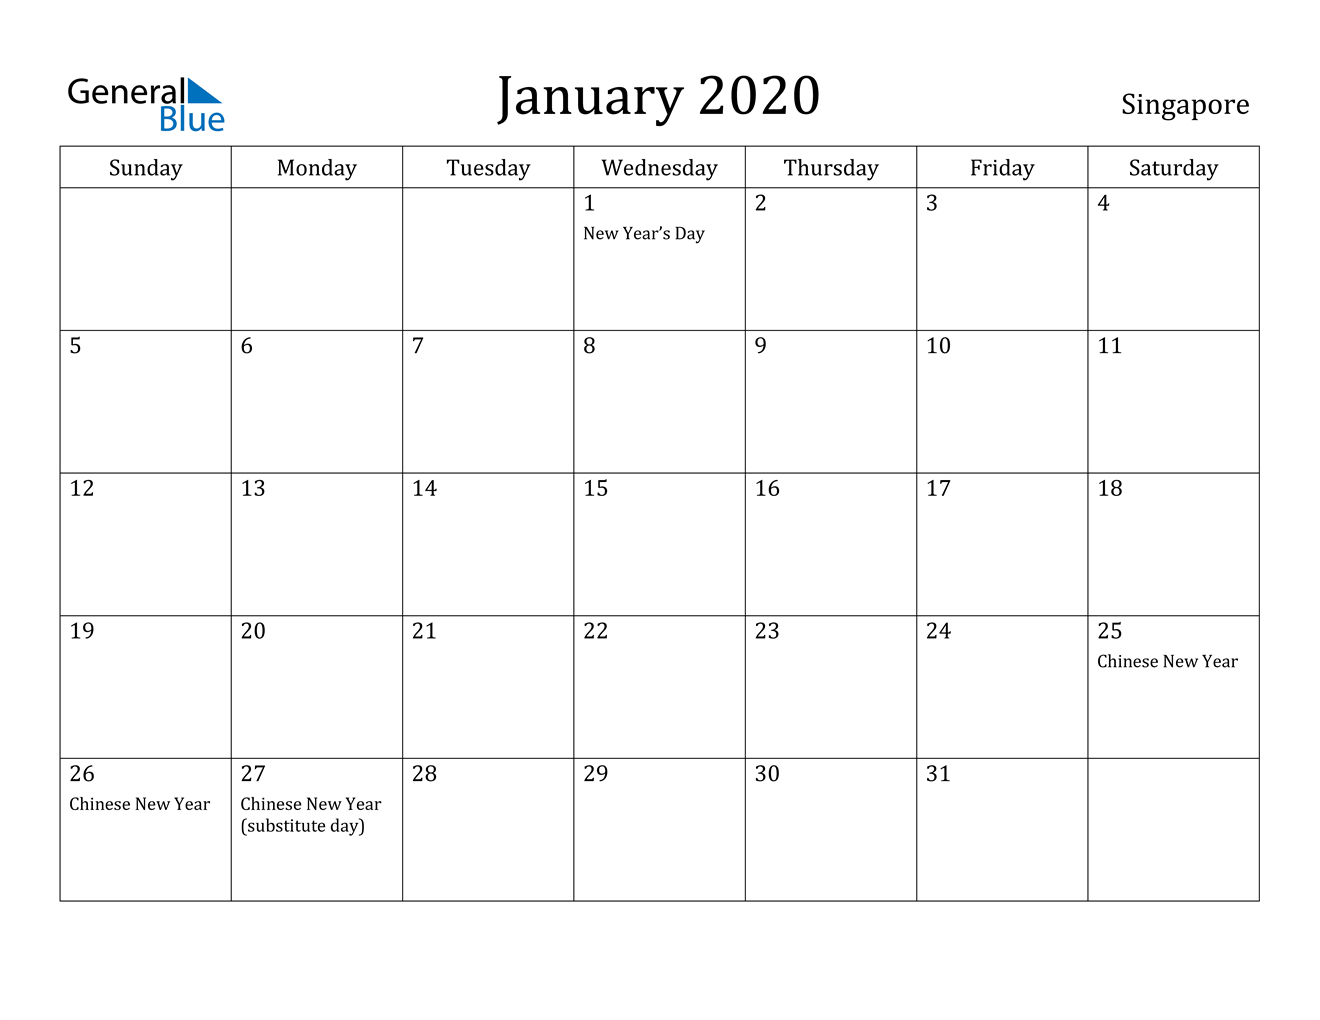 January 2020 Calendar - Singapore